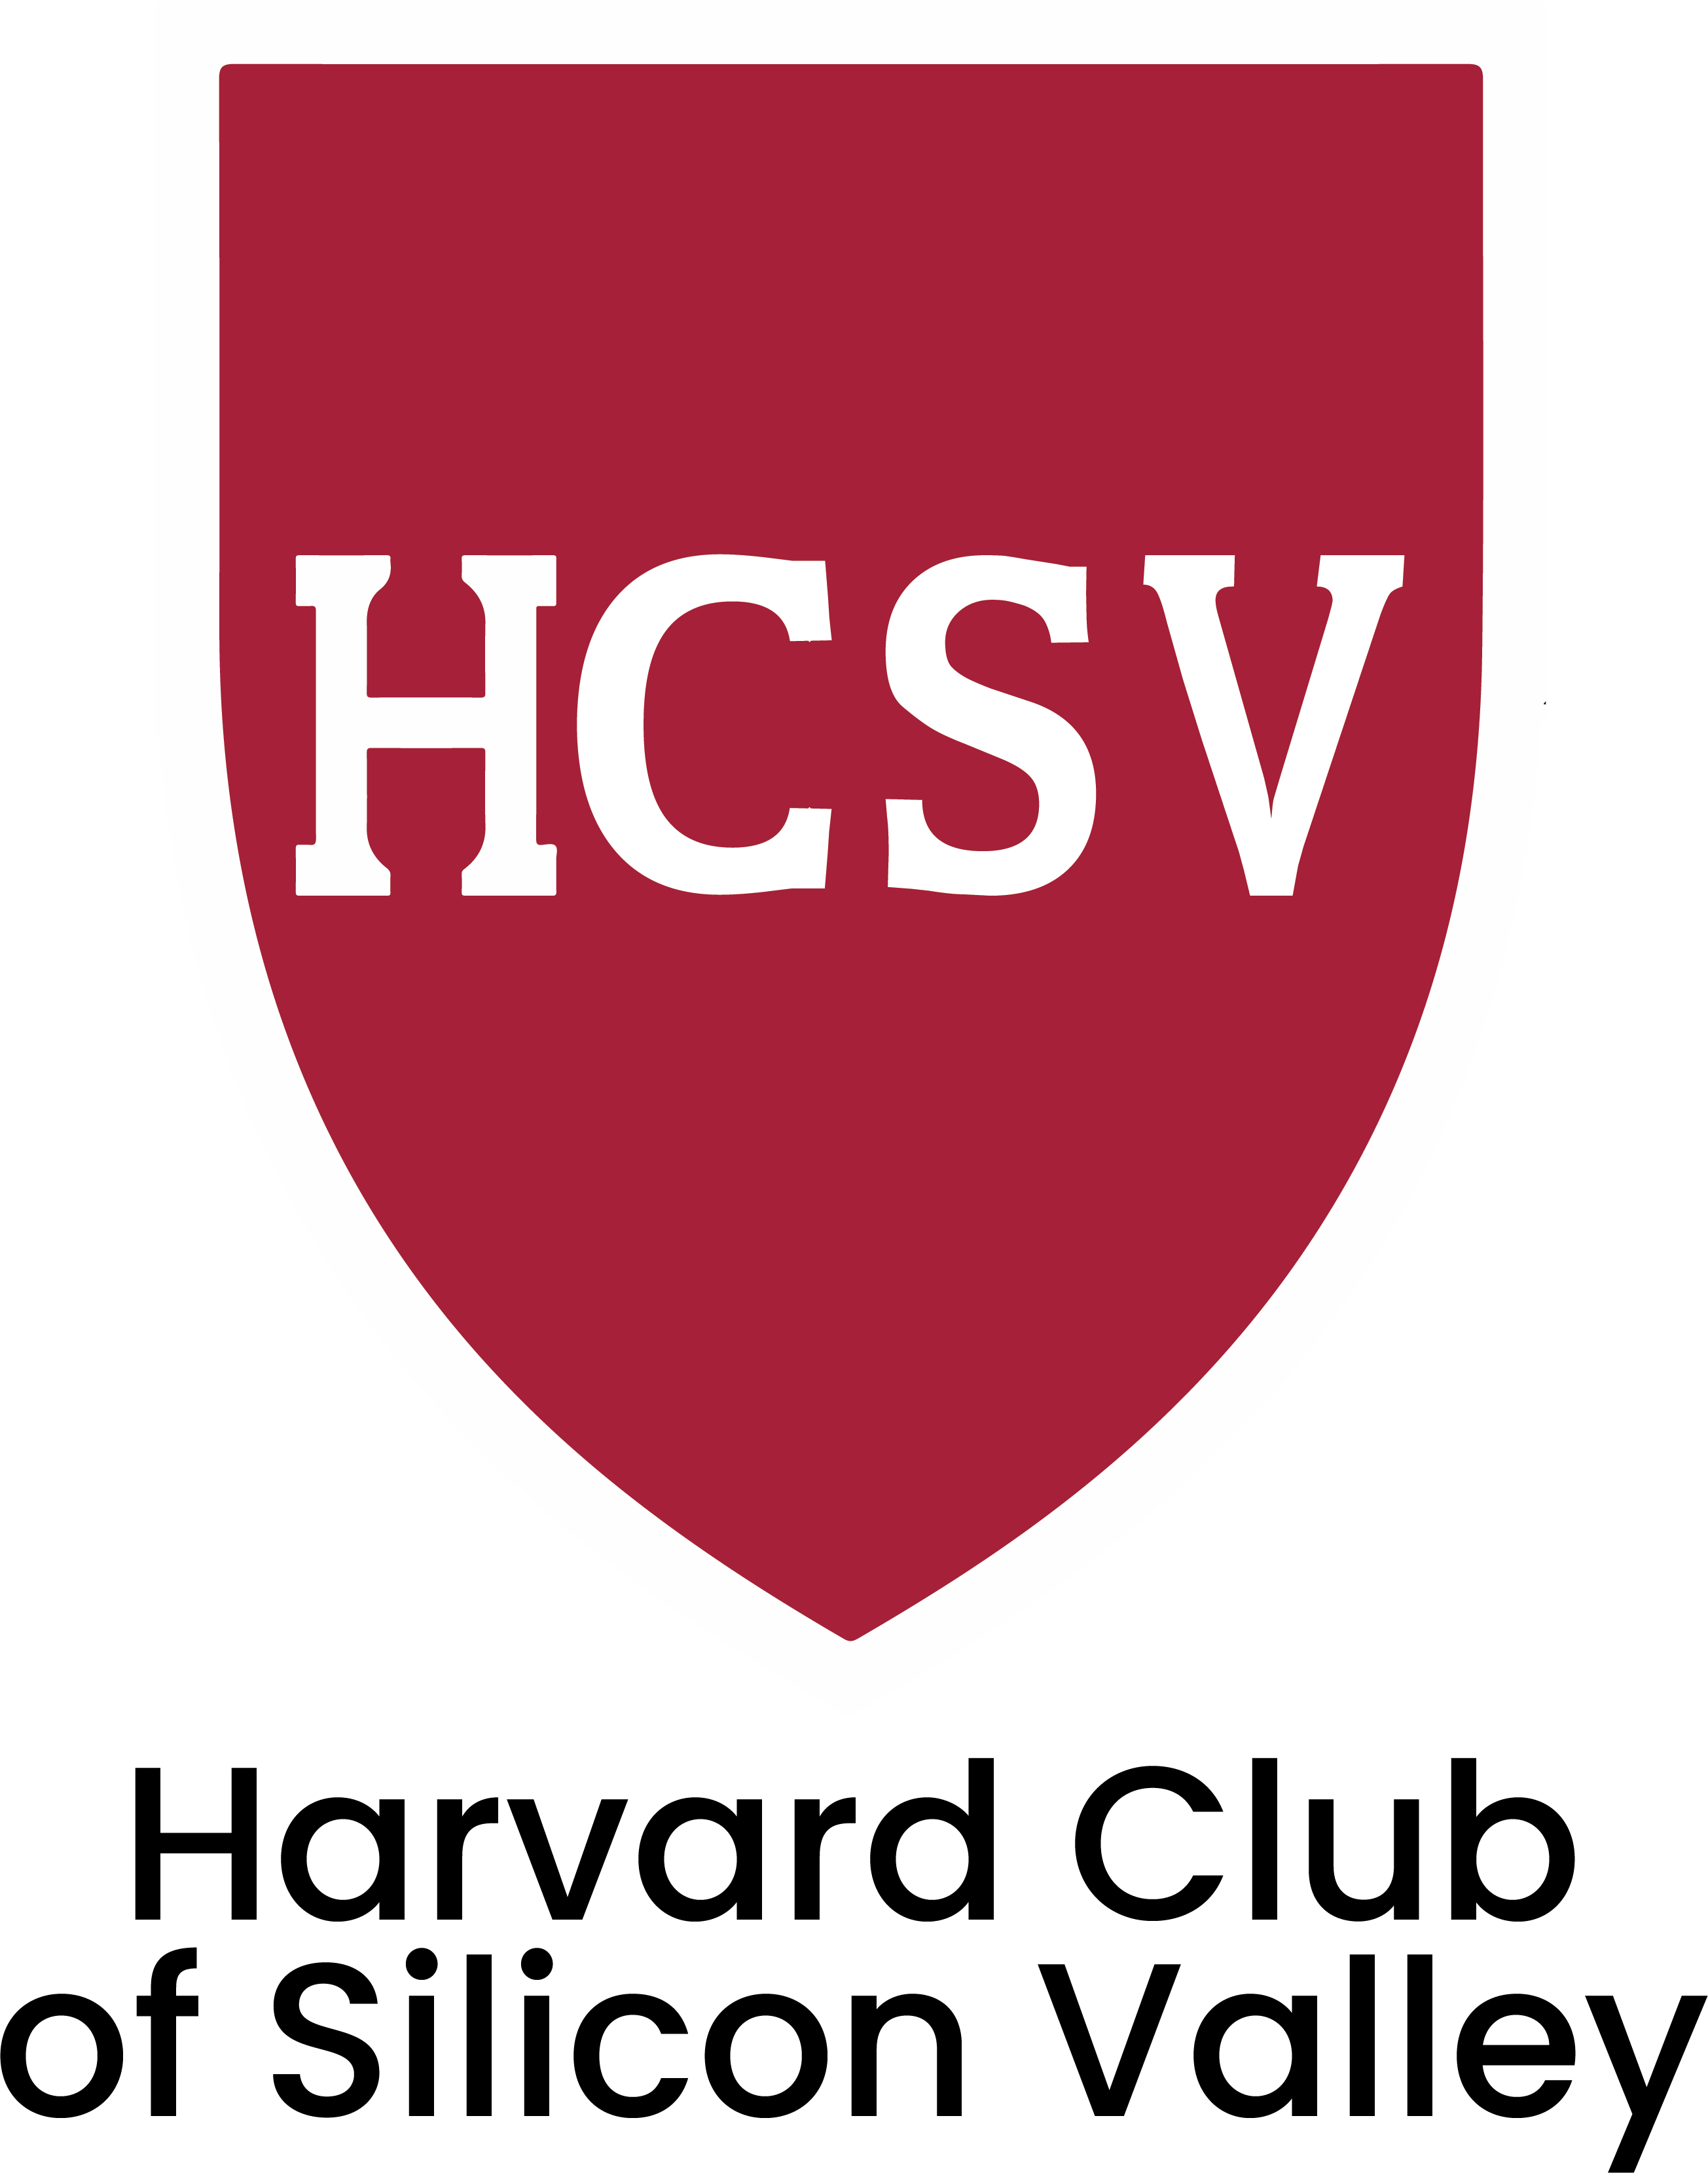 HCSV